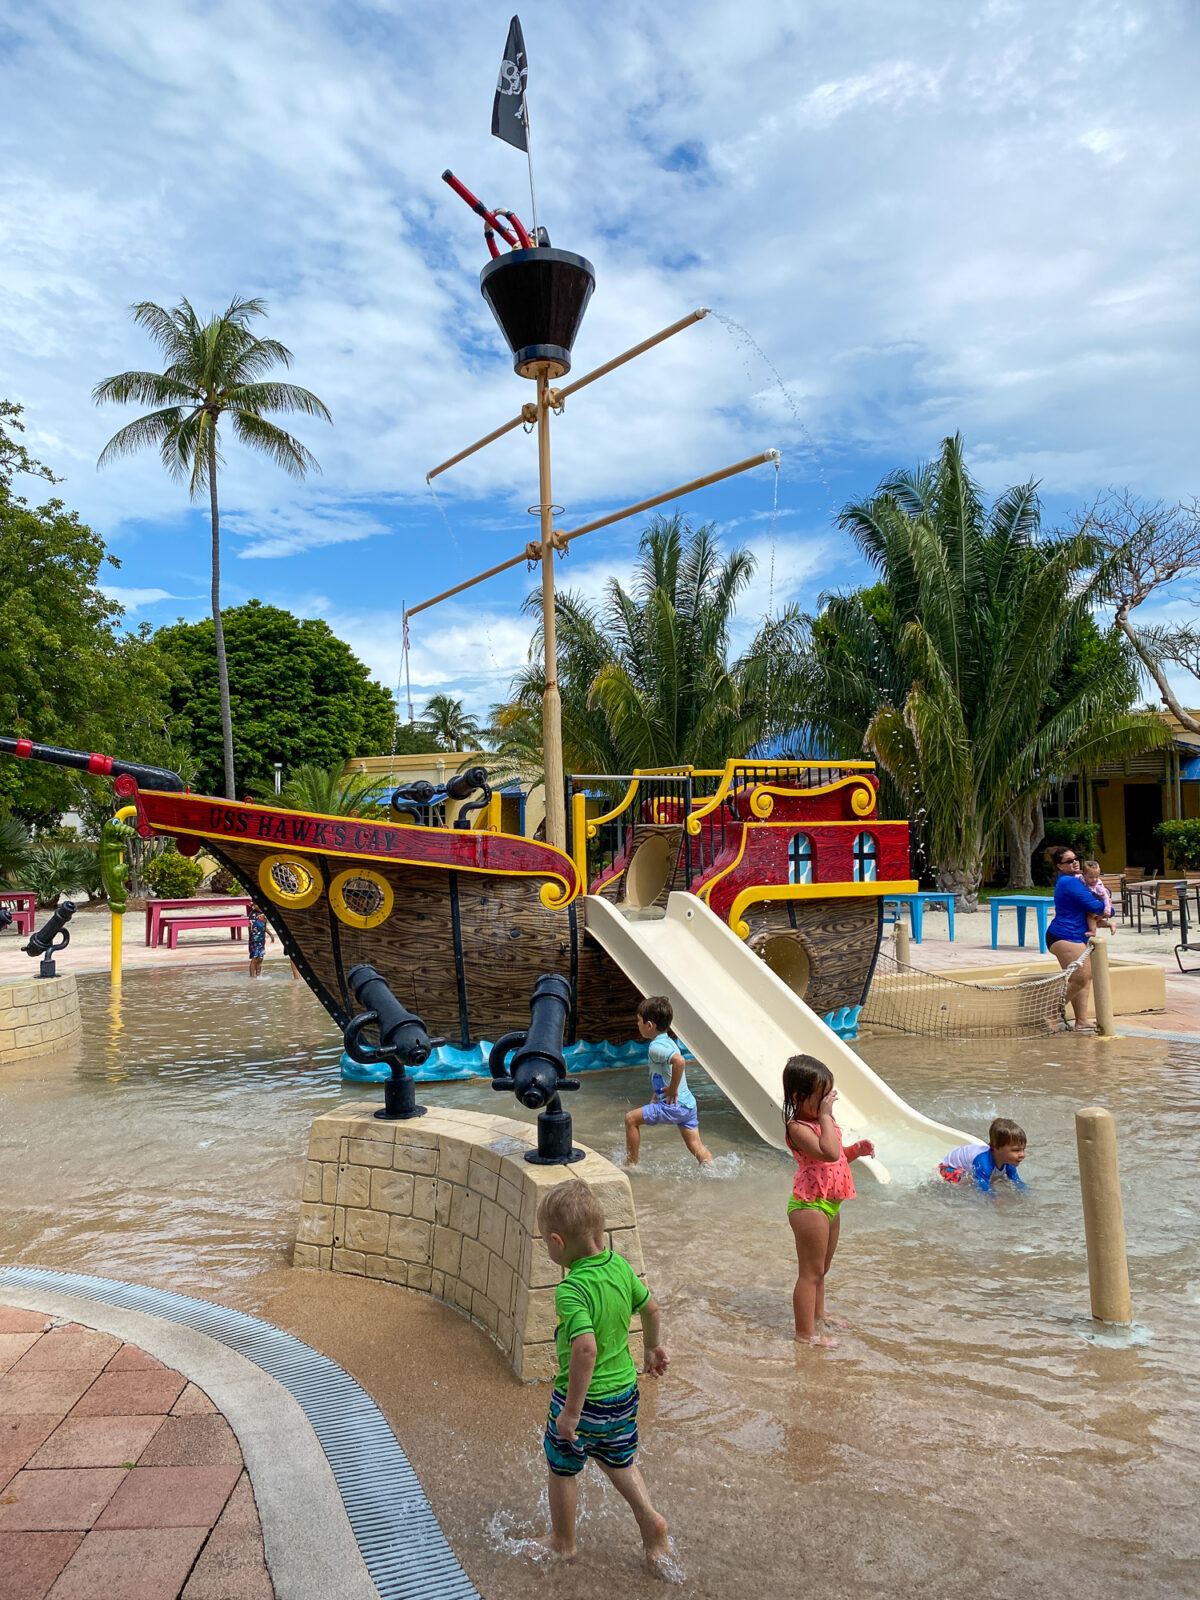 Pirate Ship splash pool at Hawks Cay Resort with kids